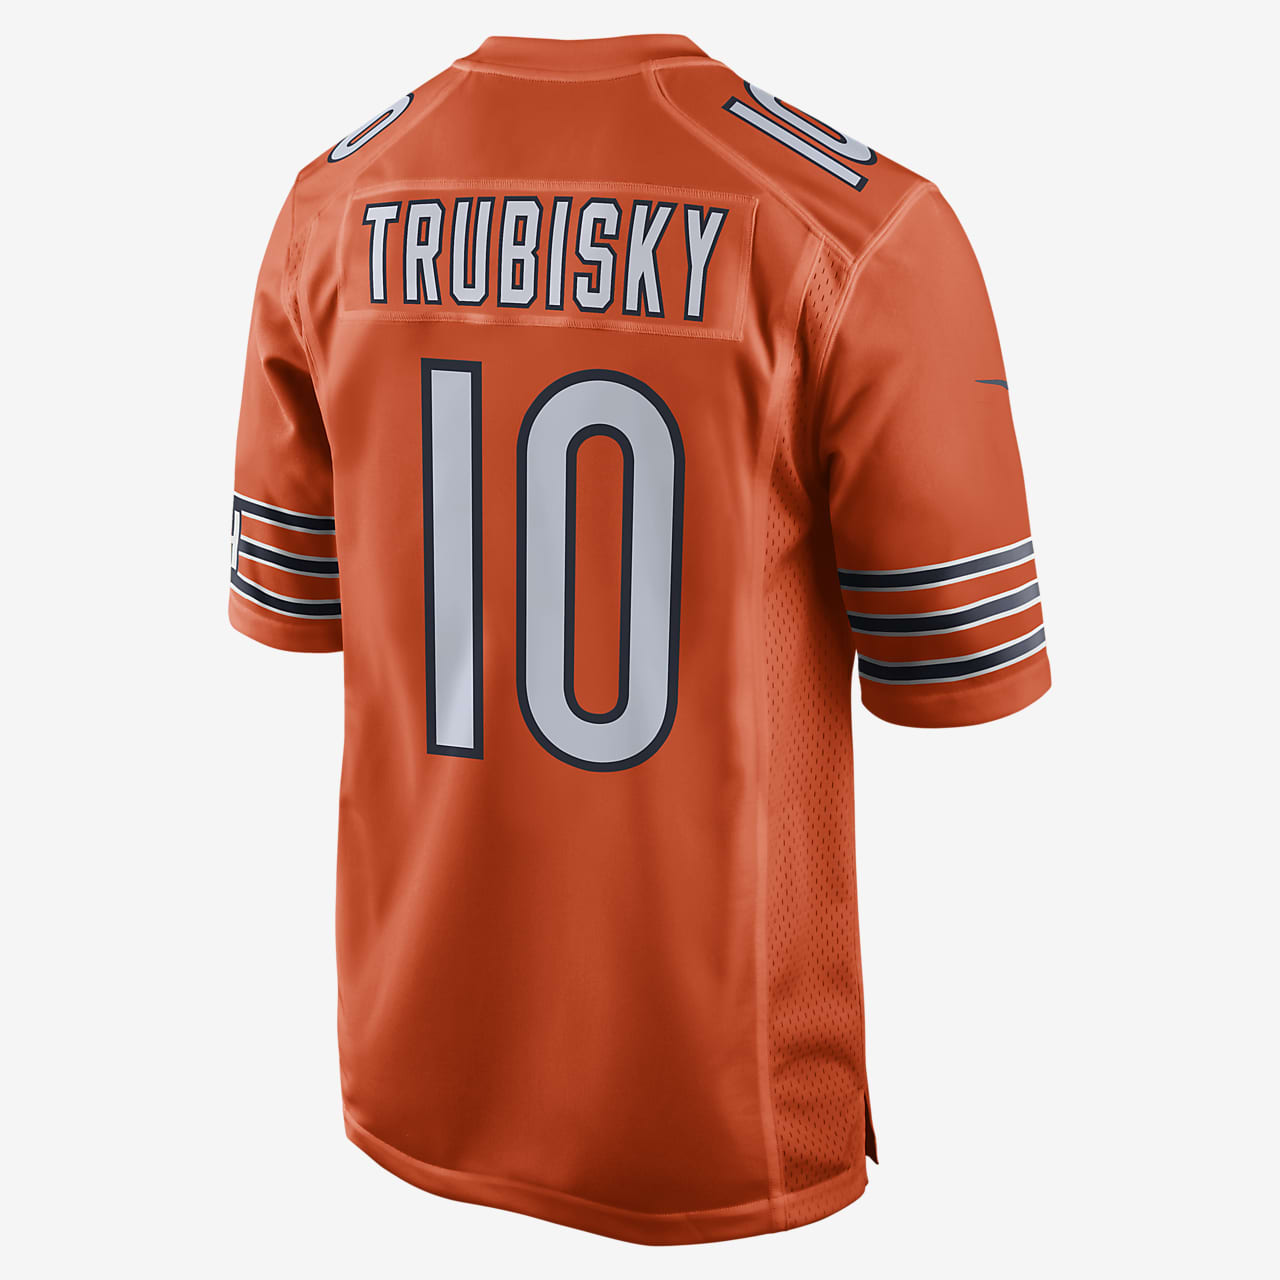 trubisky jersey,Save up to 17%,www.ilcascinone.com